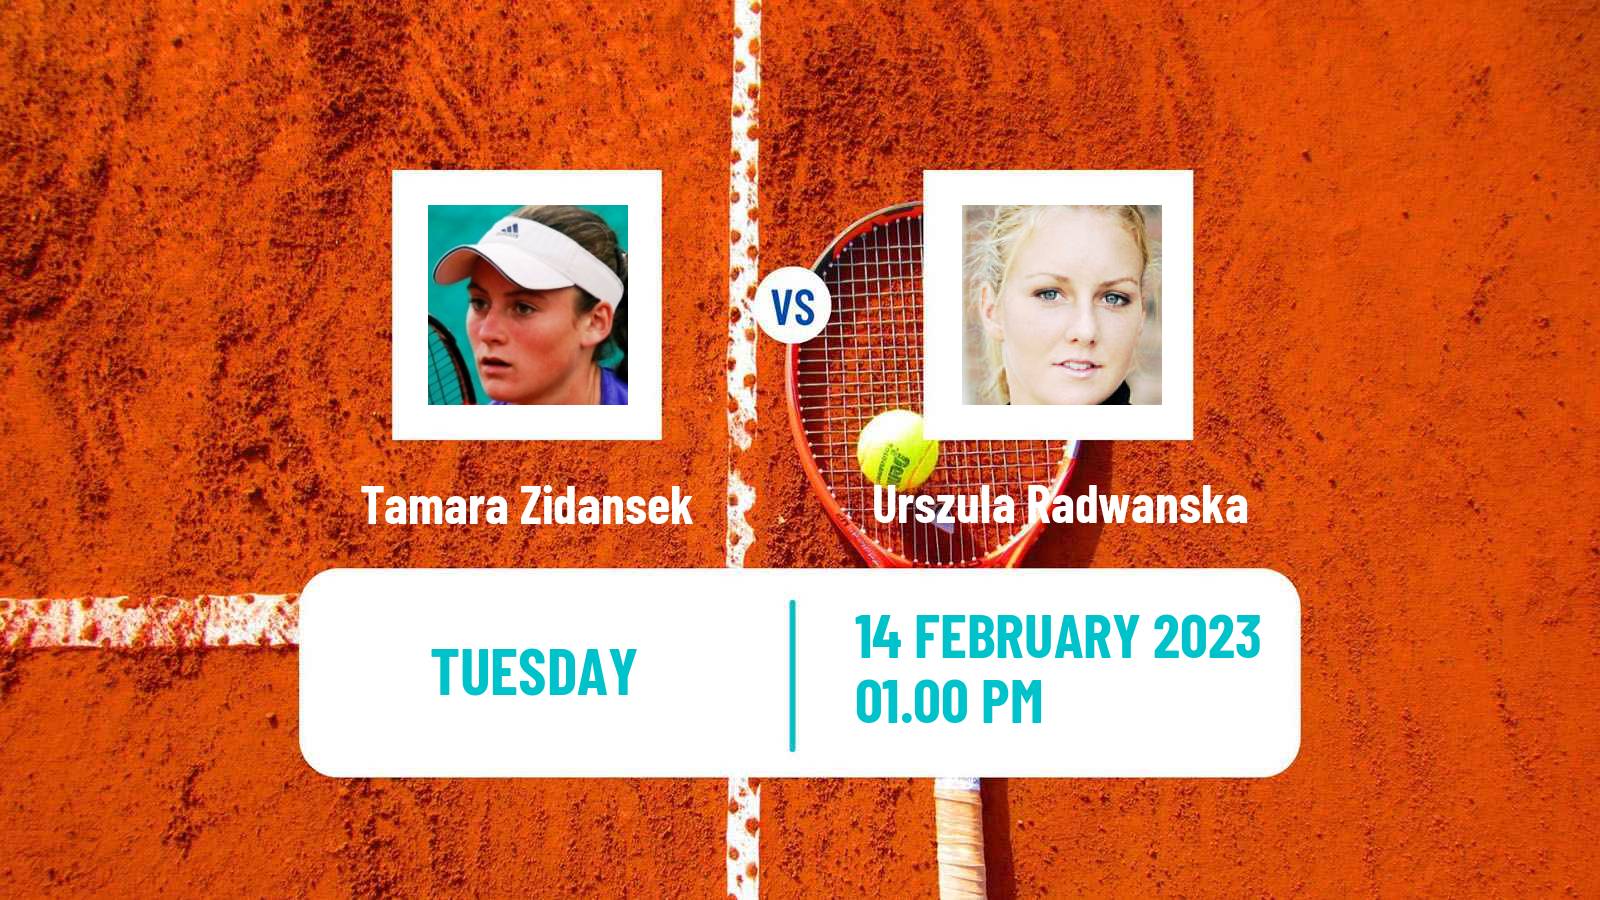 Tennis ITF Tournaments Tamara Zidansek - Urszula Radwanska